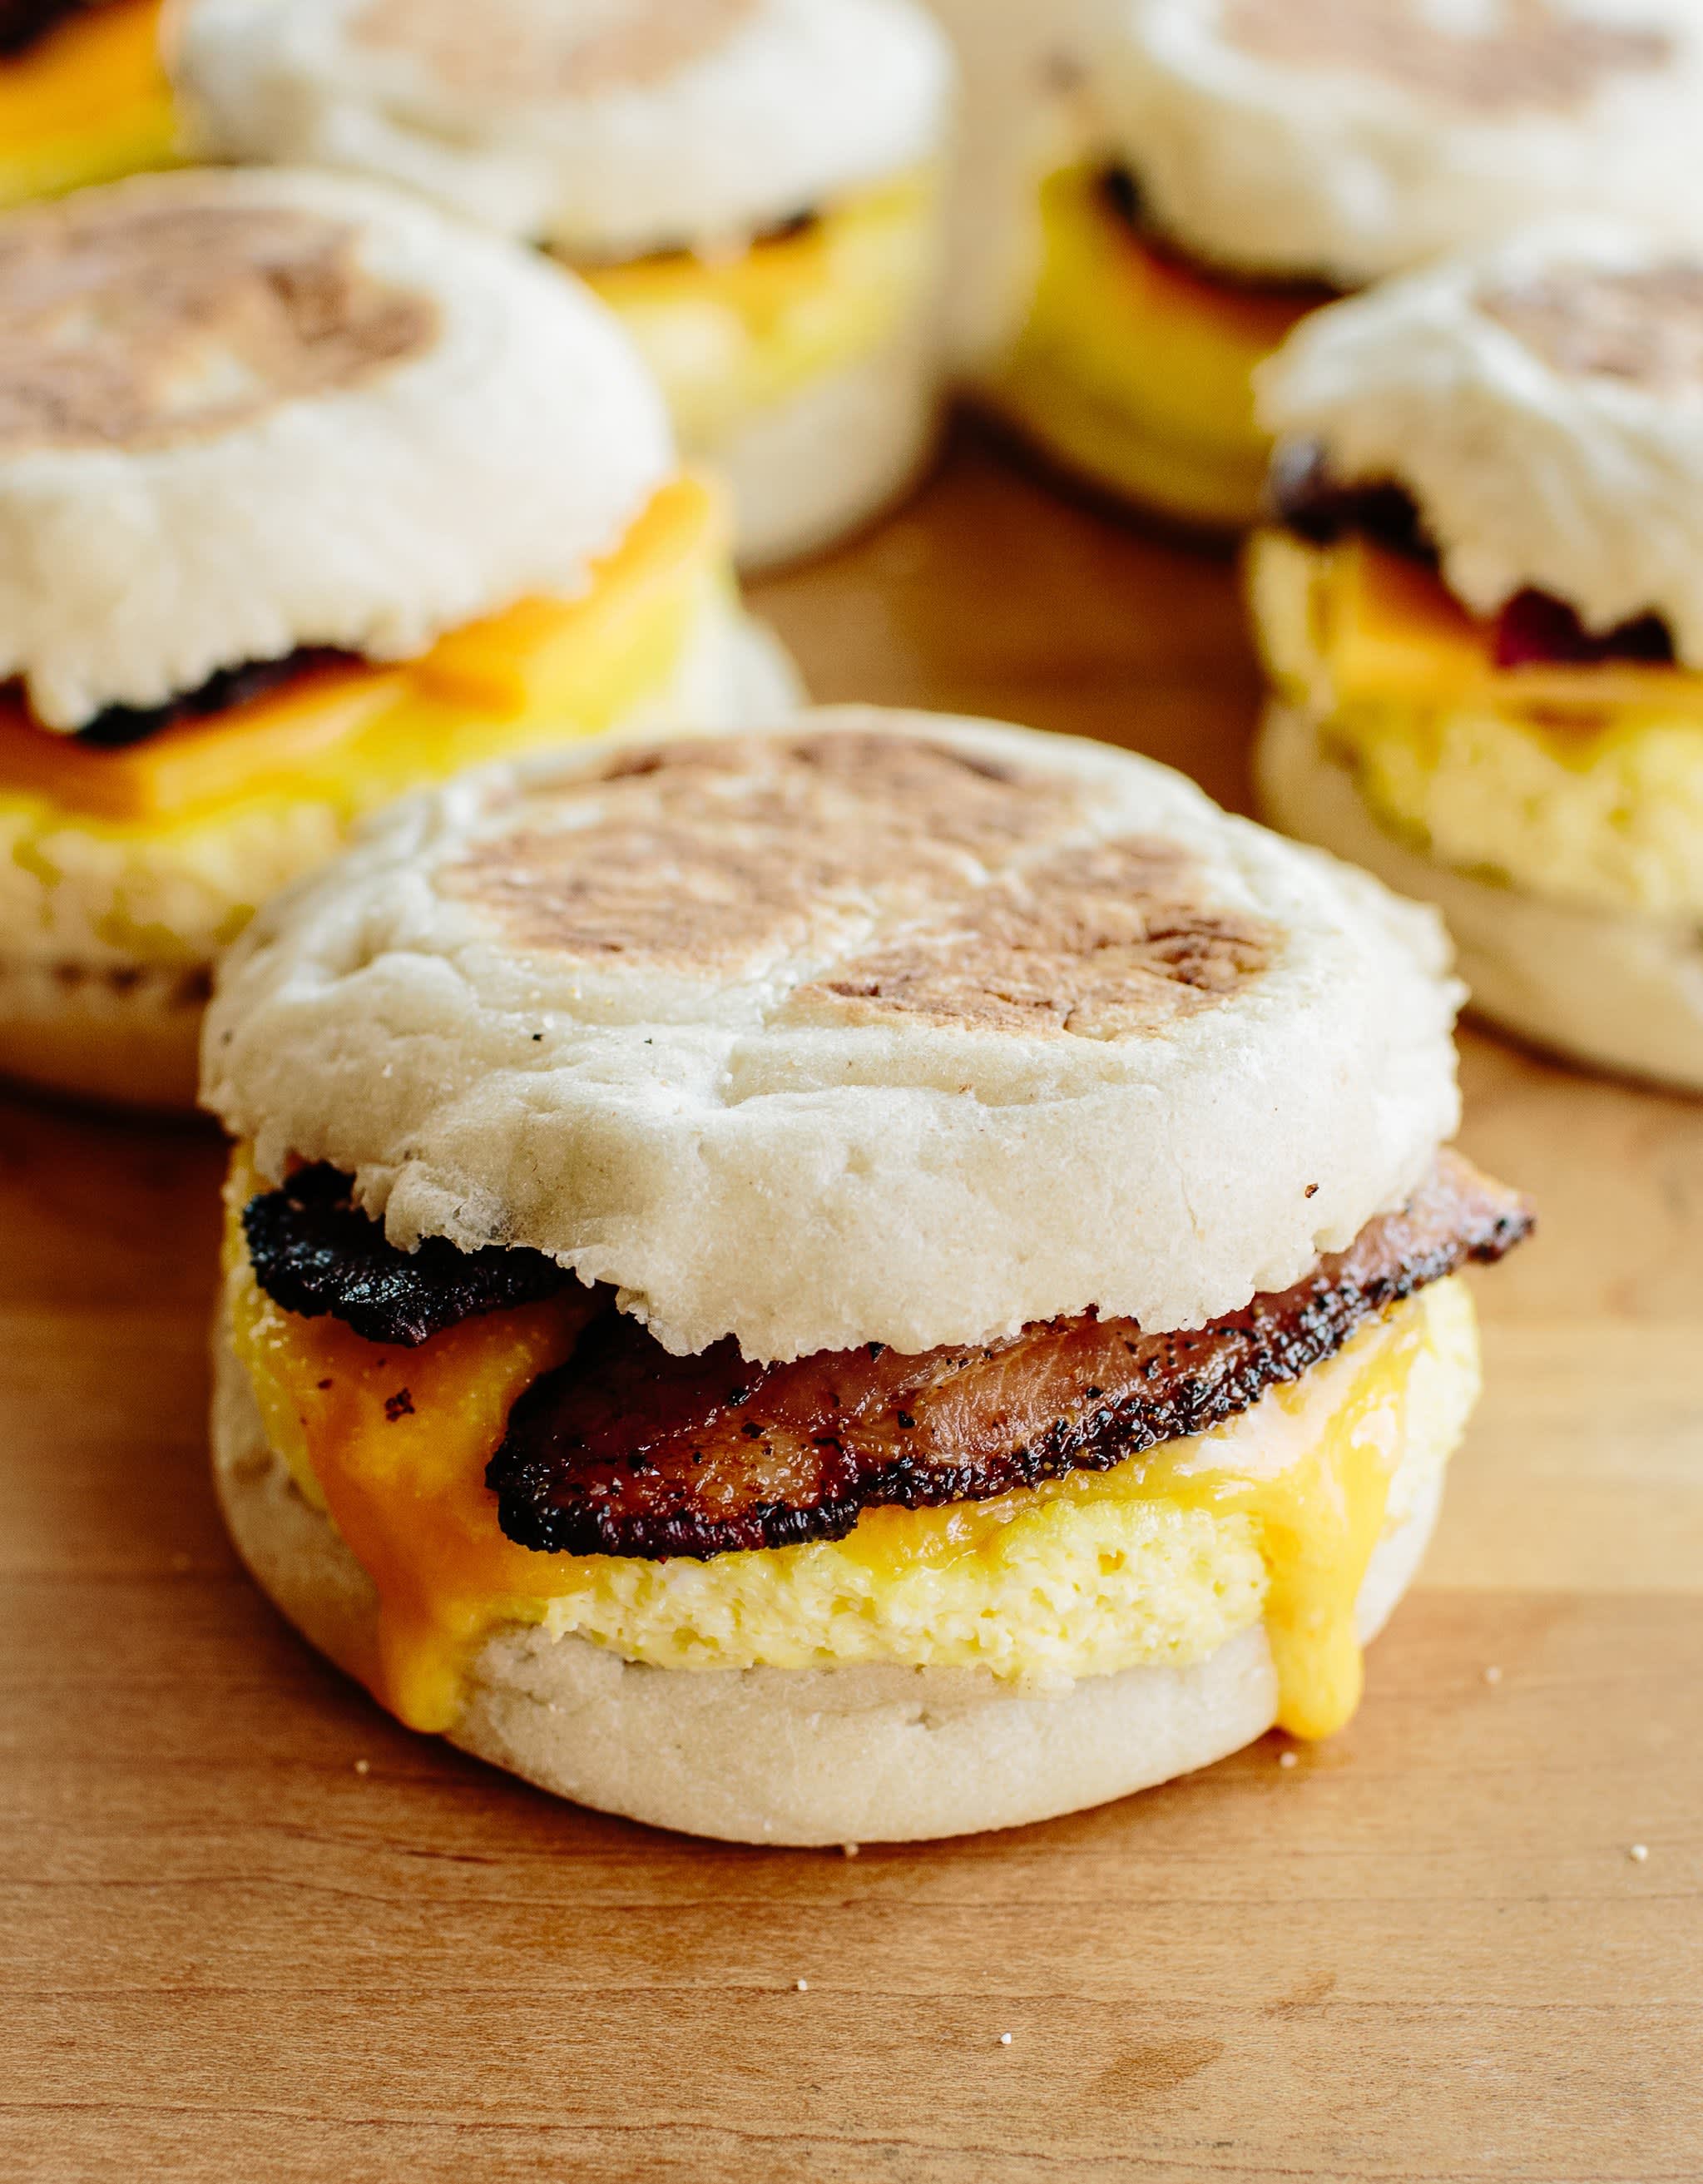 Healthy Breakfast Meal Prep Sandwiches - Bake & Bacon